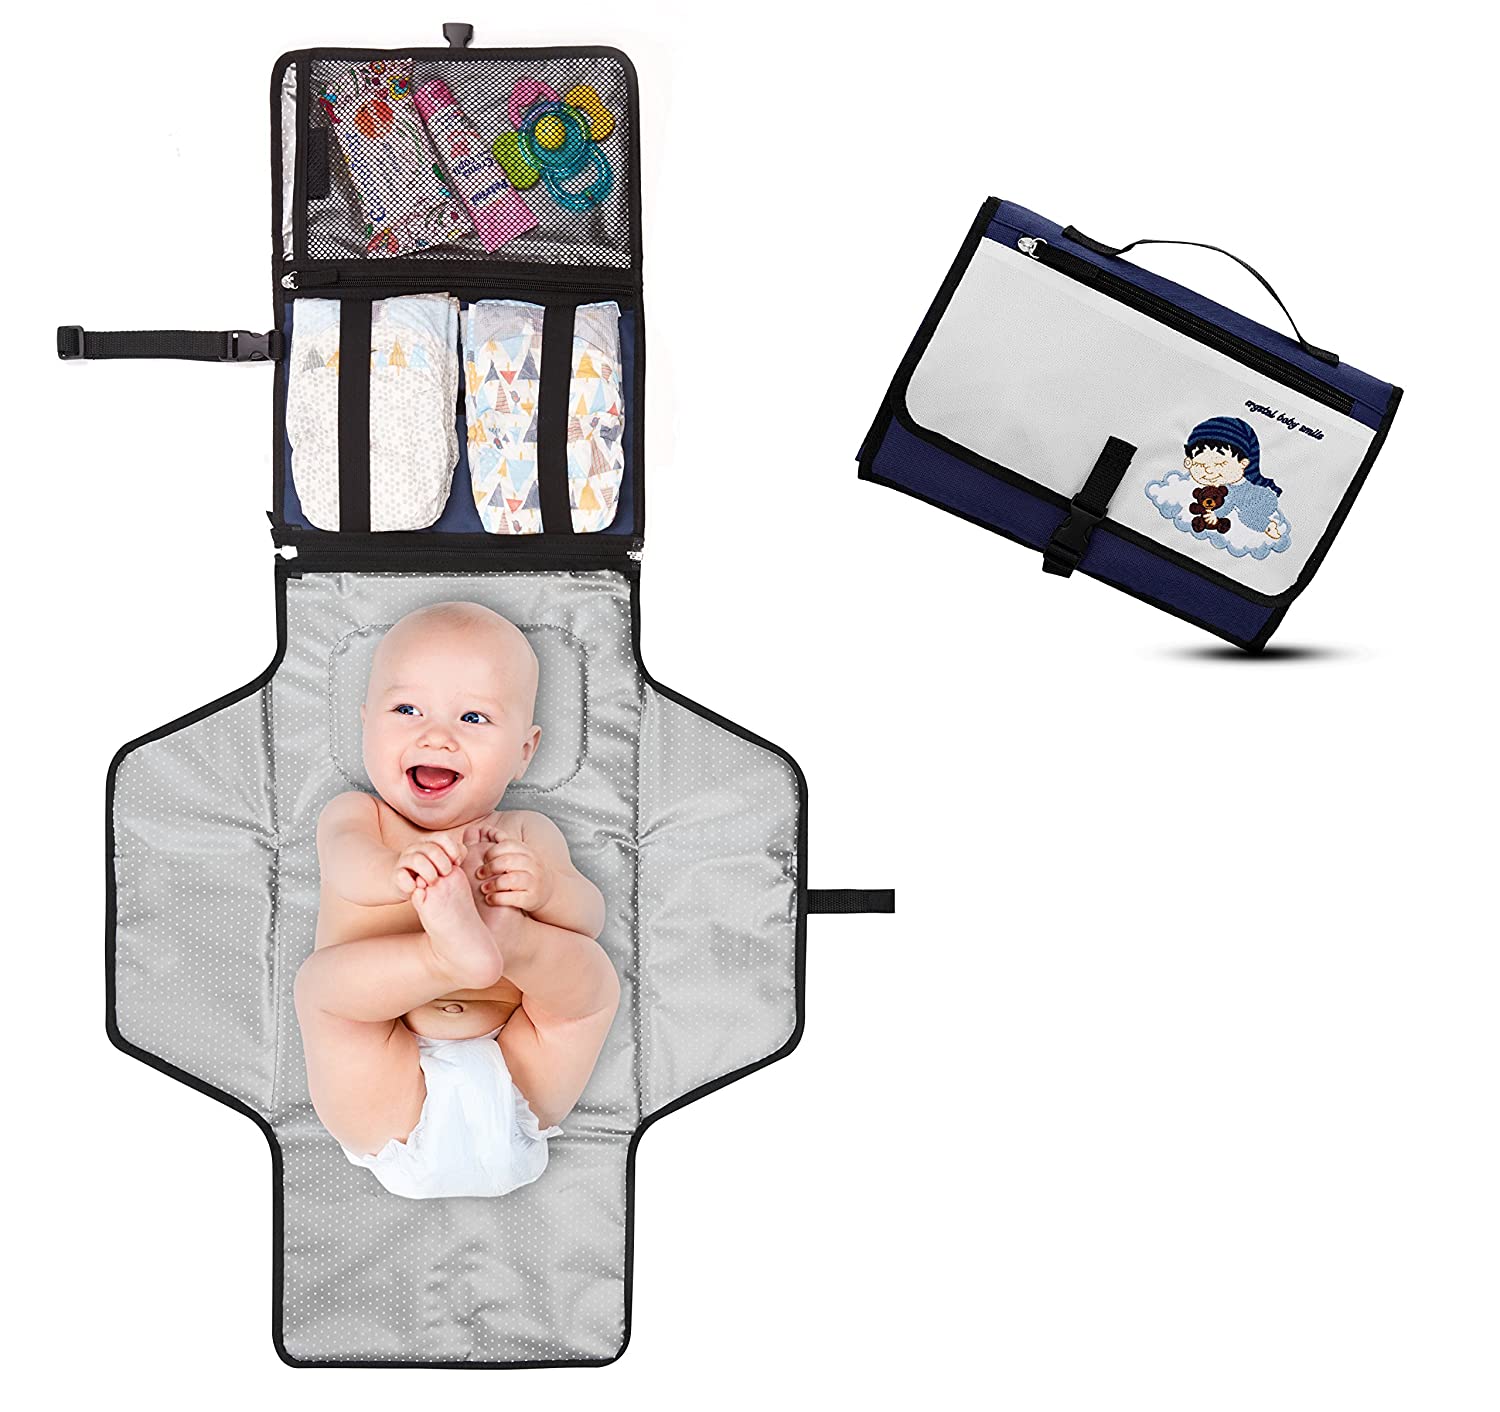 Portable Diaper Changing Pad - Premium Quality Travel Changing Station Kit